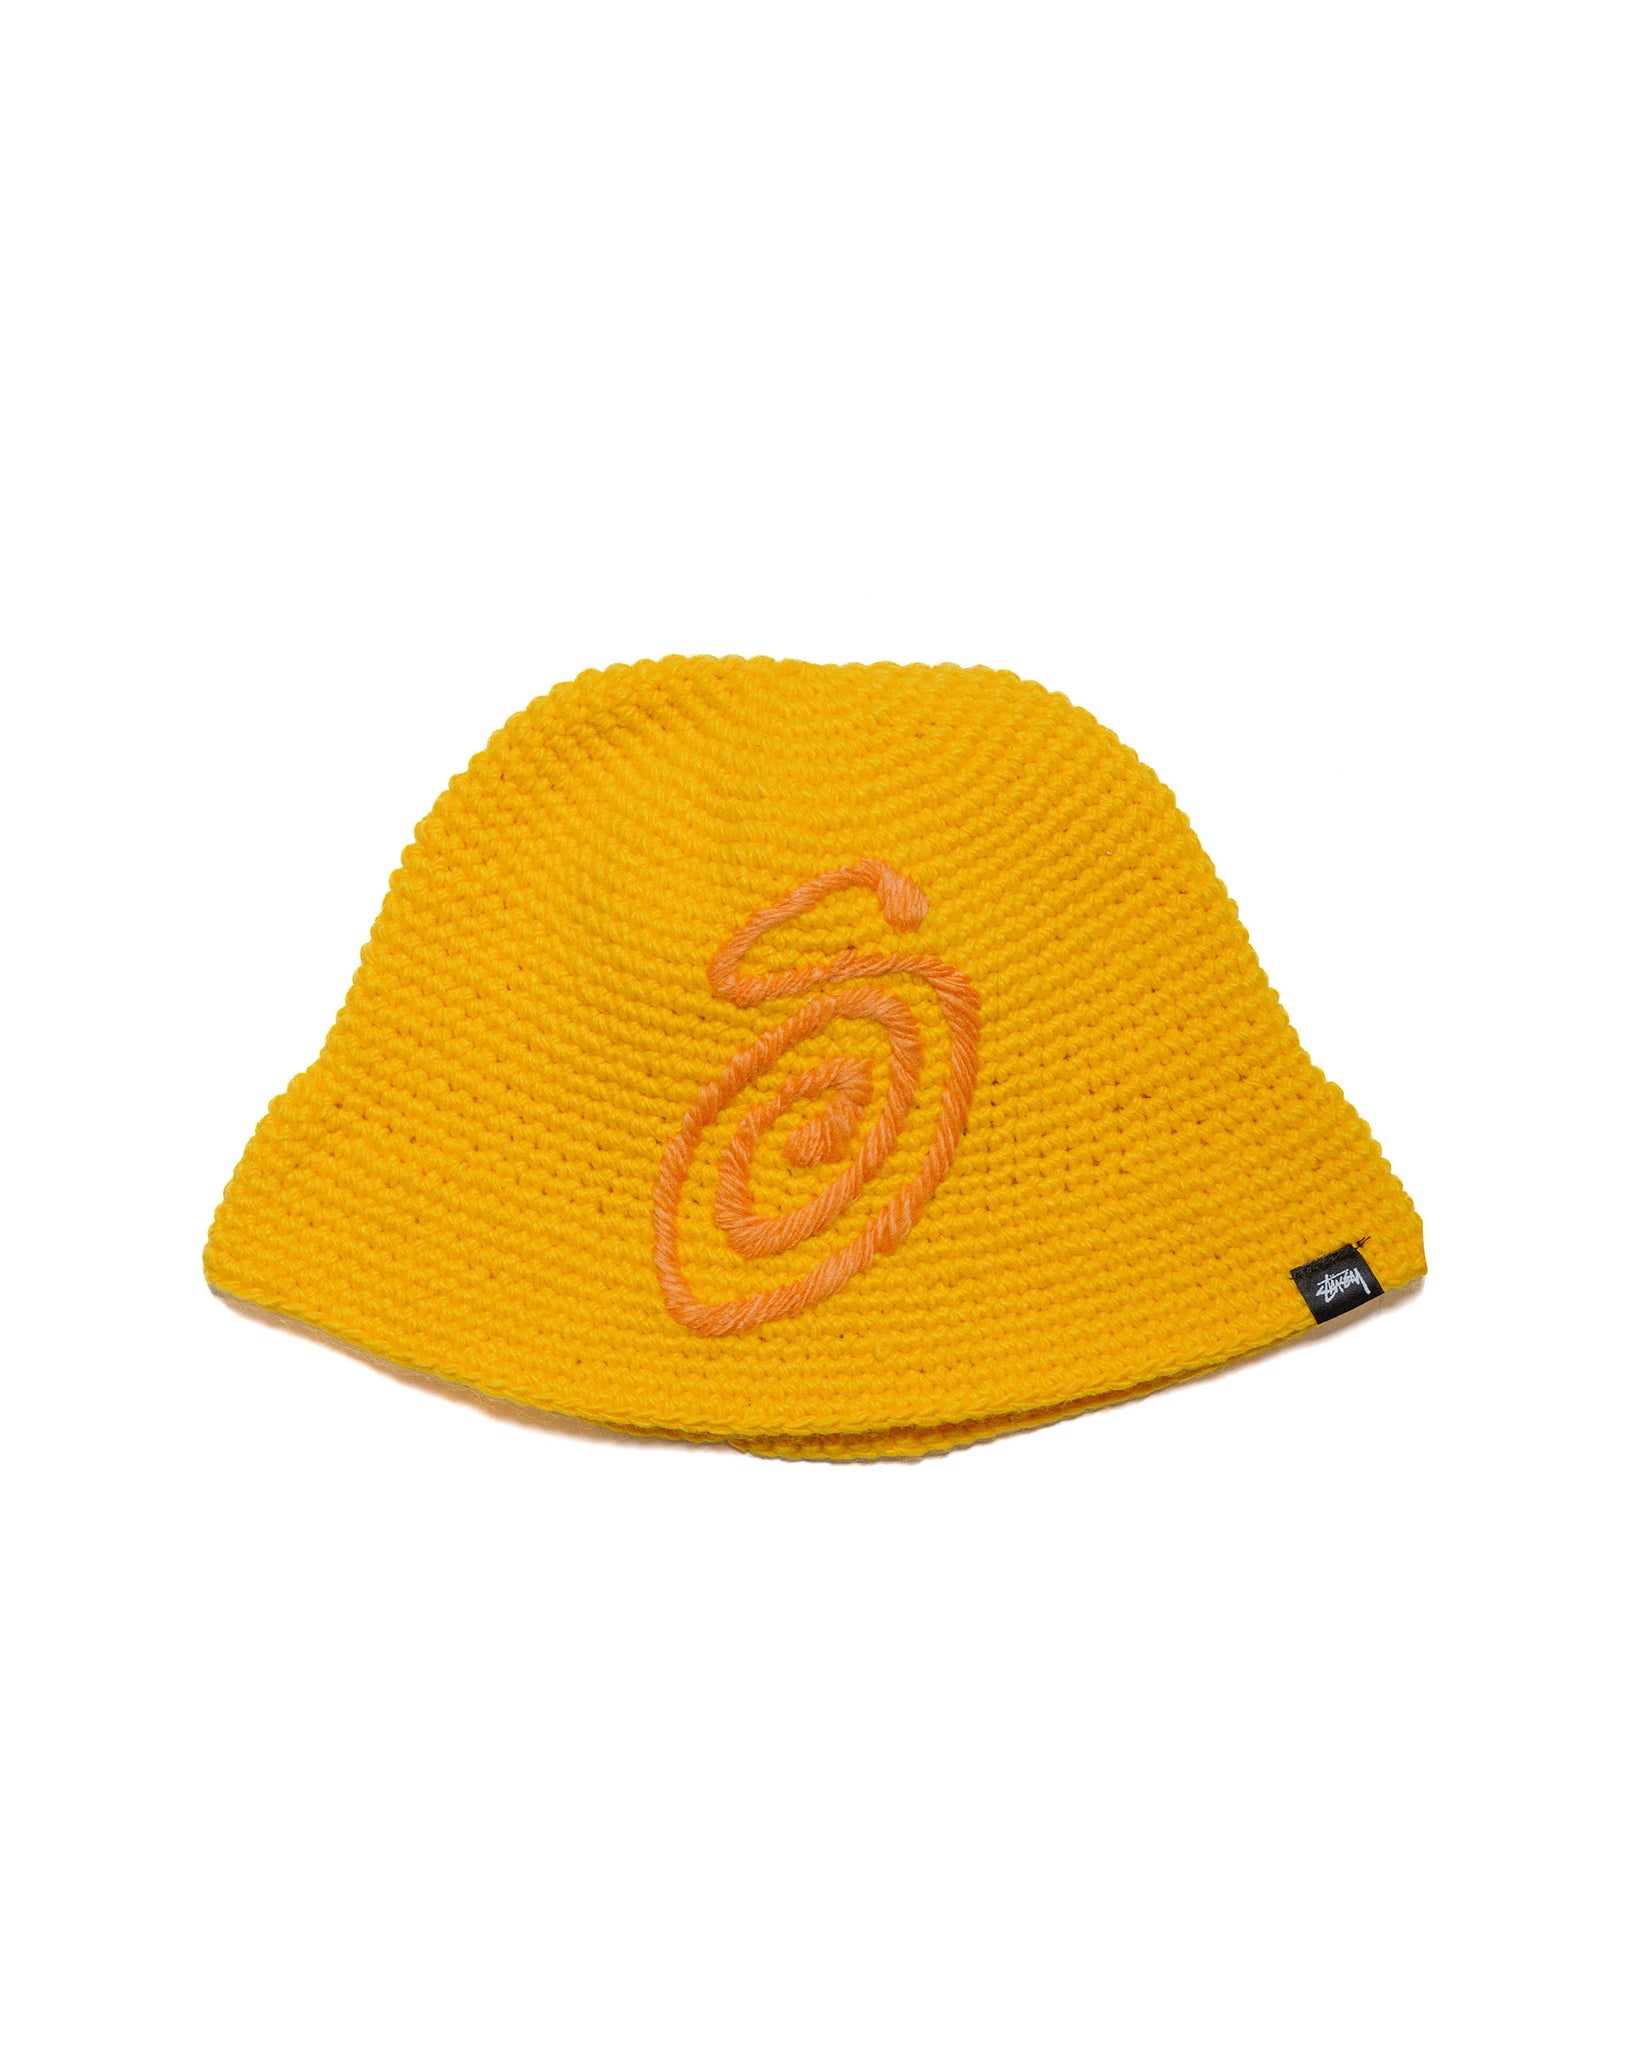 Stüssy Swirly S Knit Bucket Hat Yellow